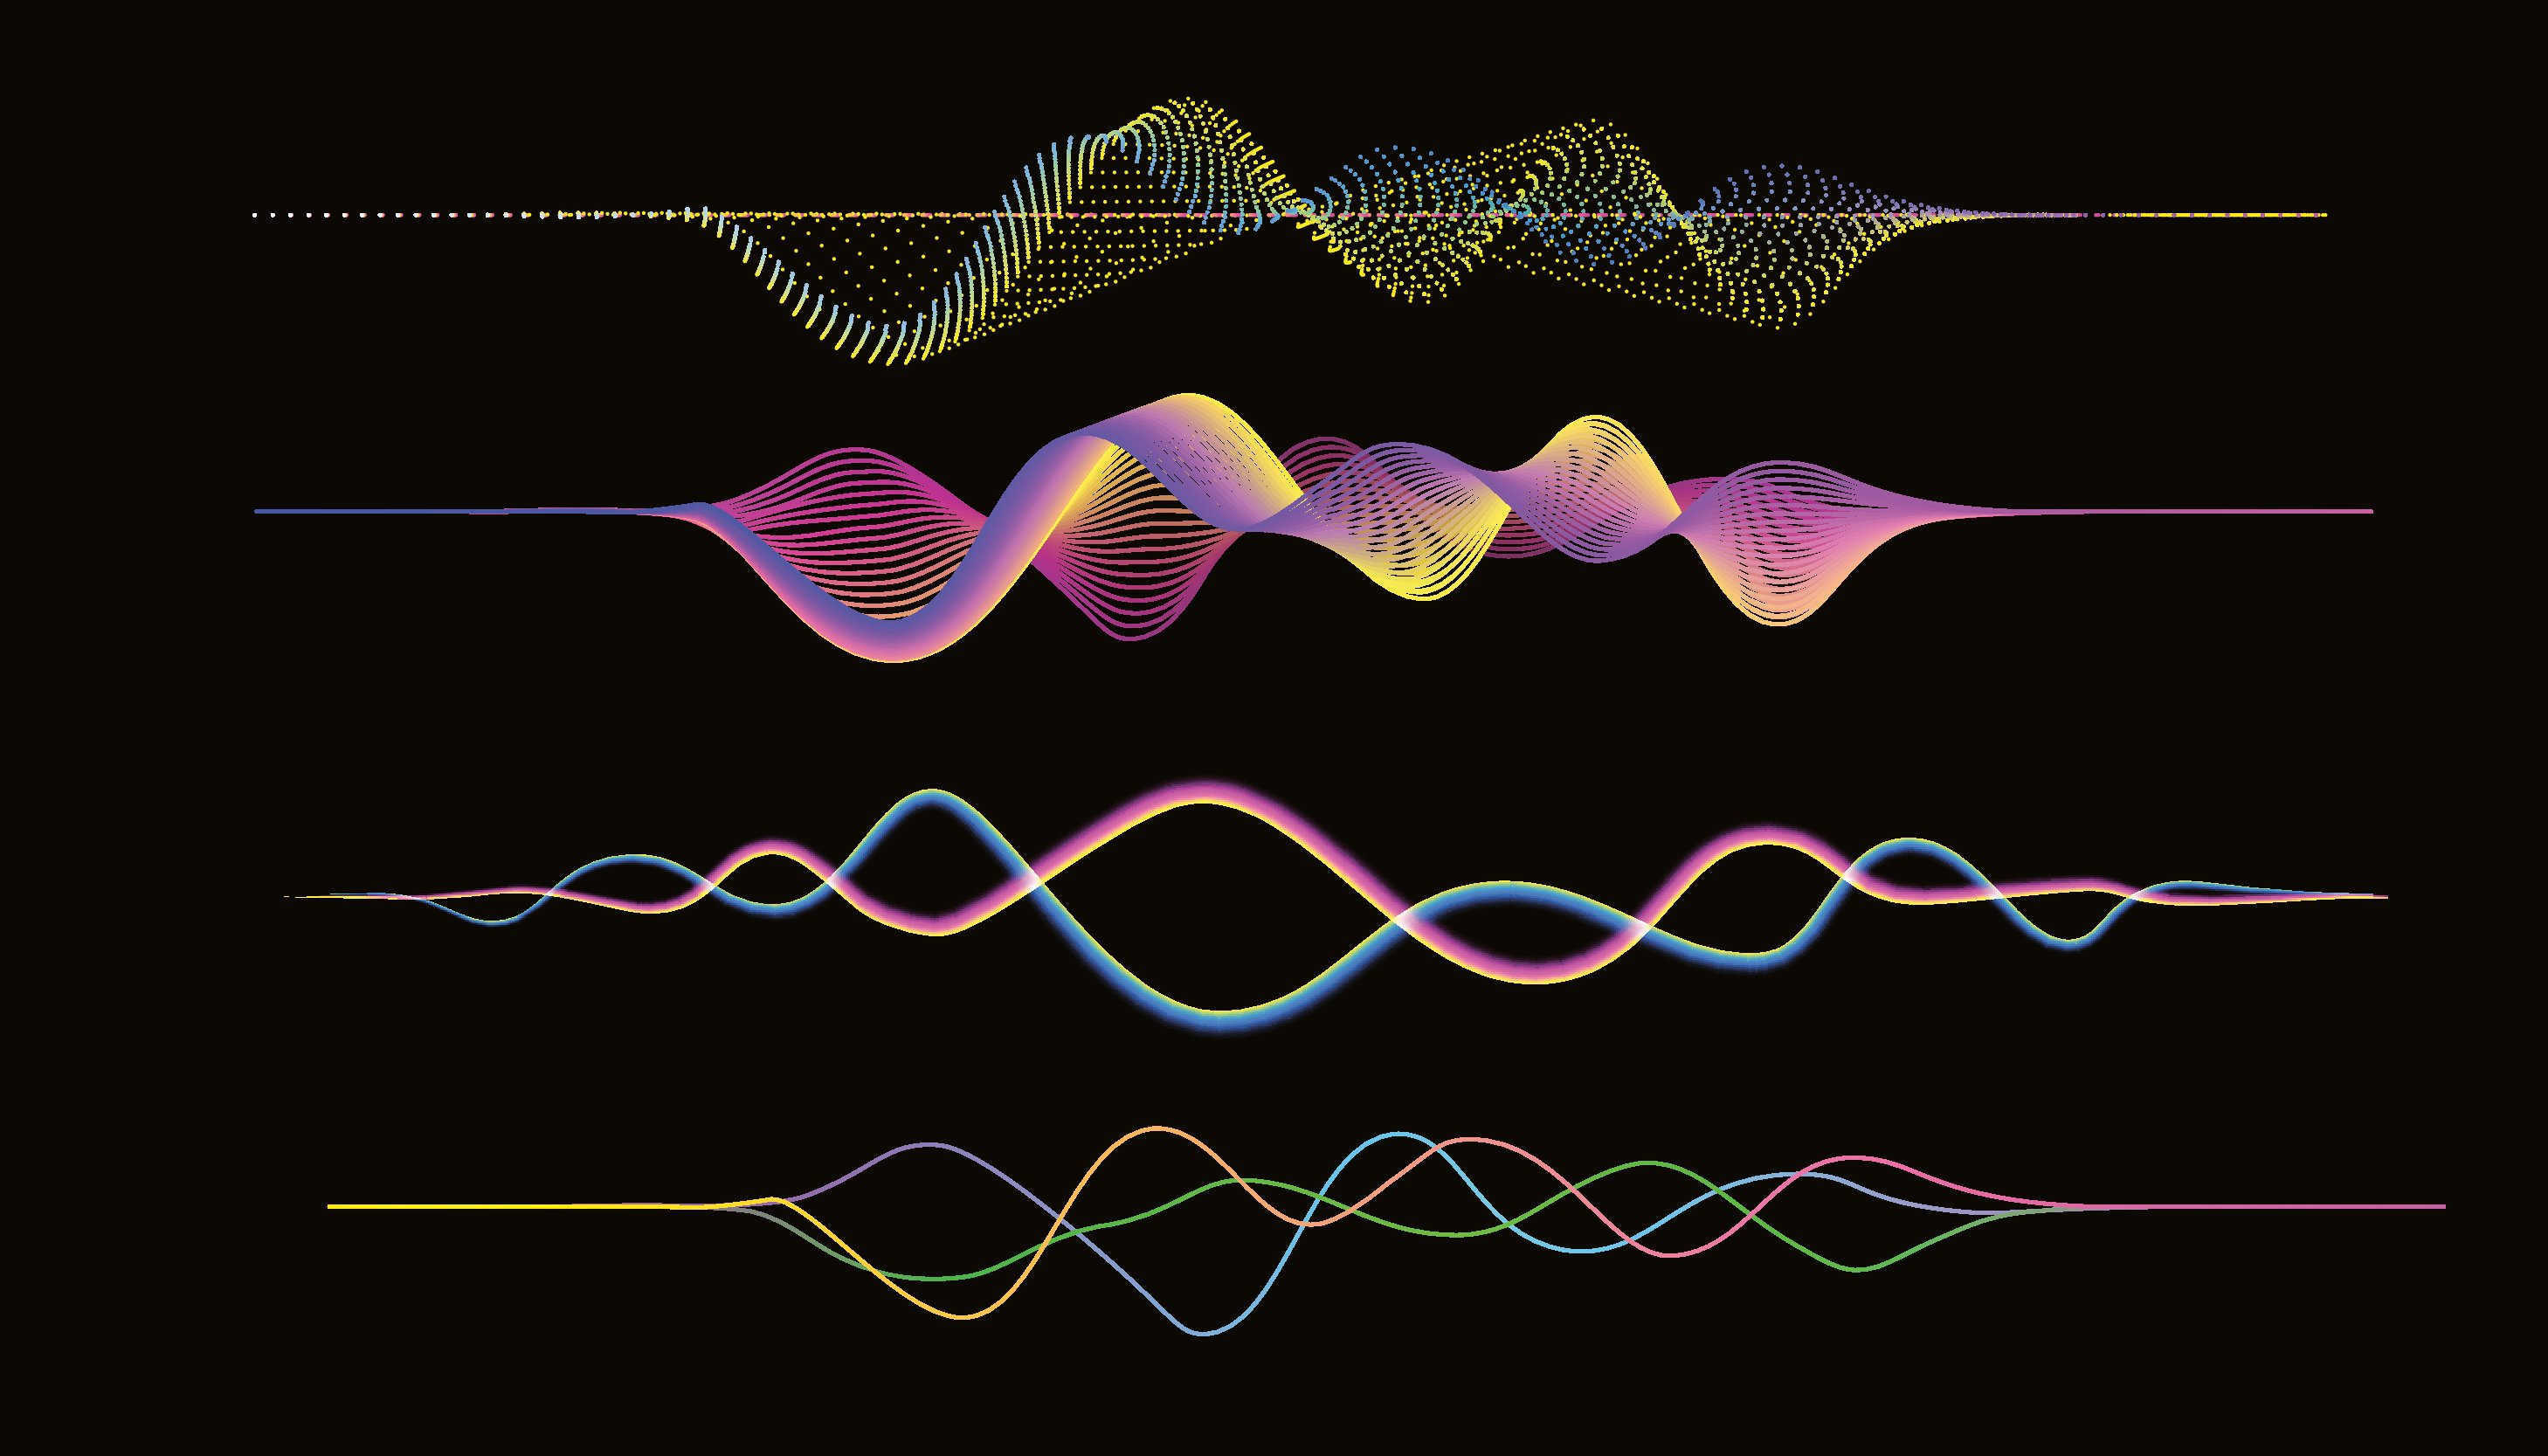 4 different types of radio waves demonstrating historic RF milestones